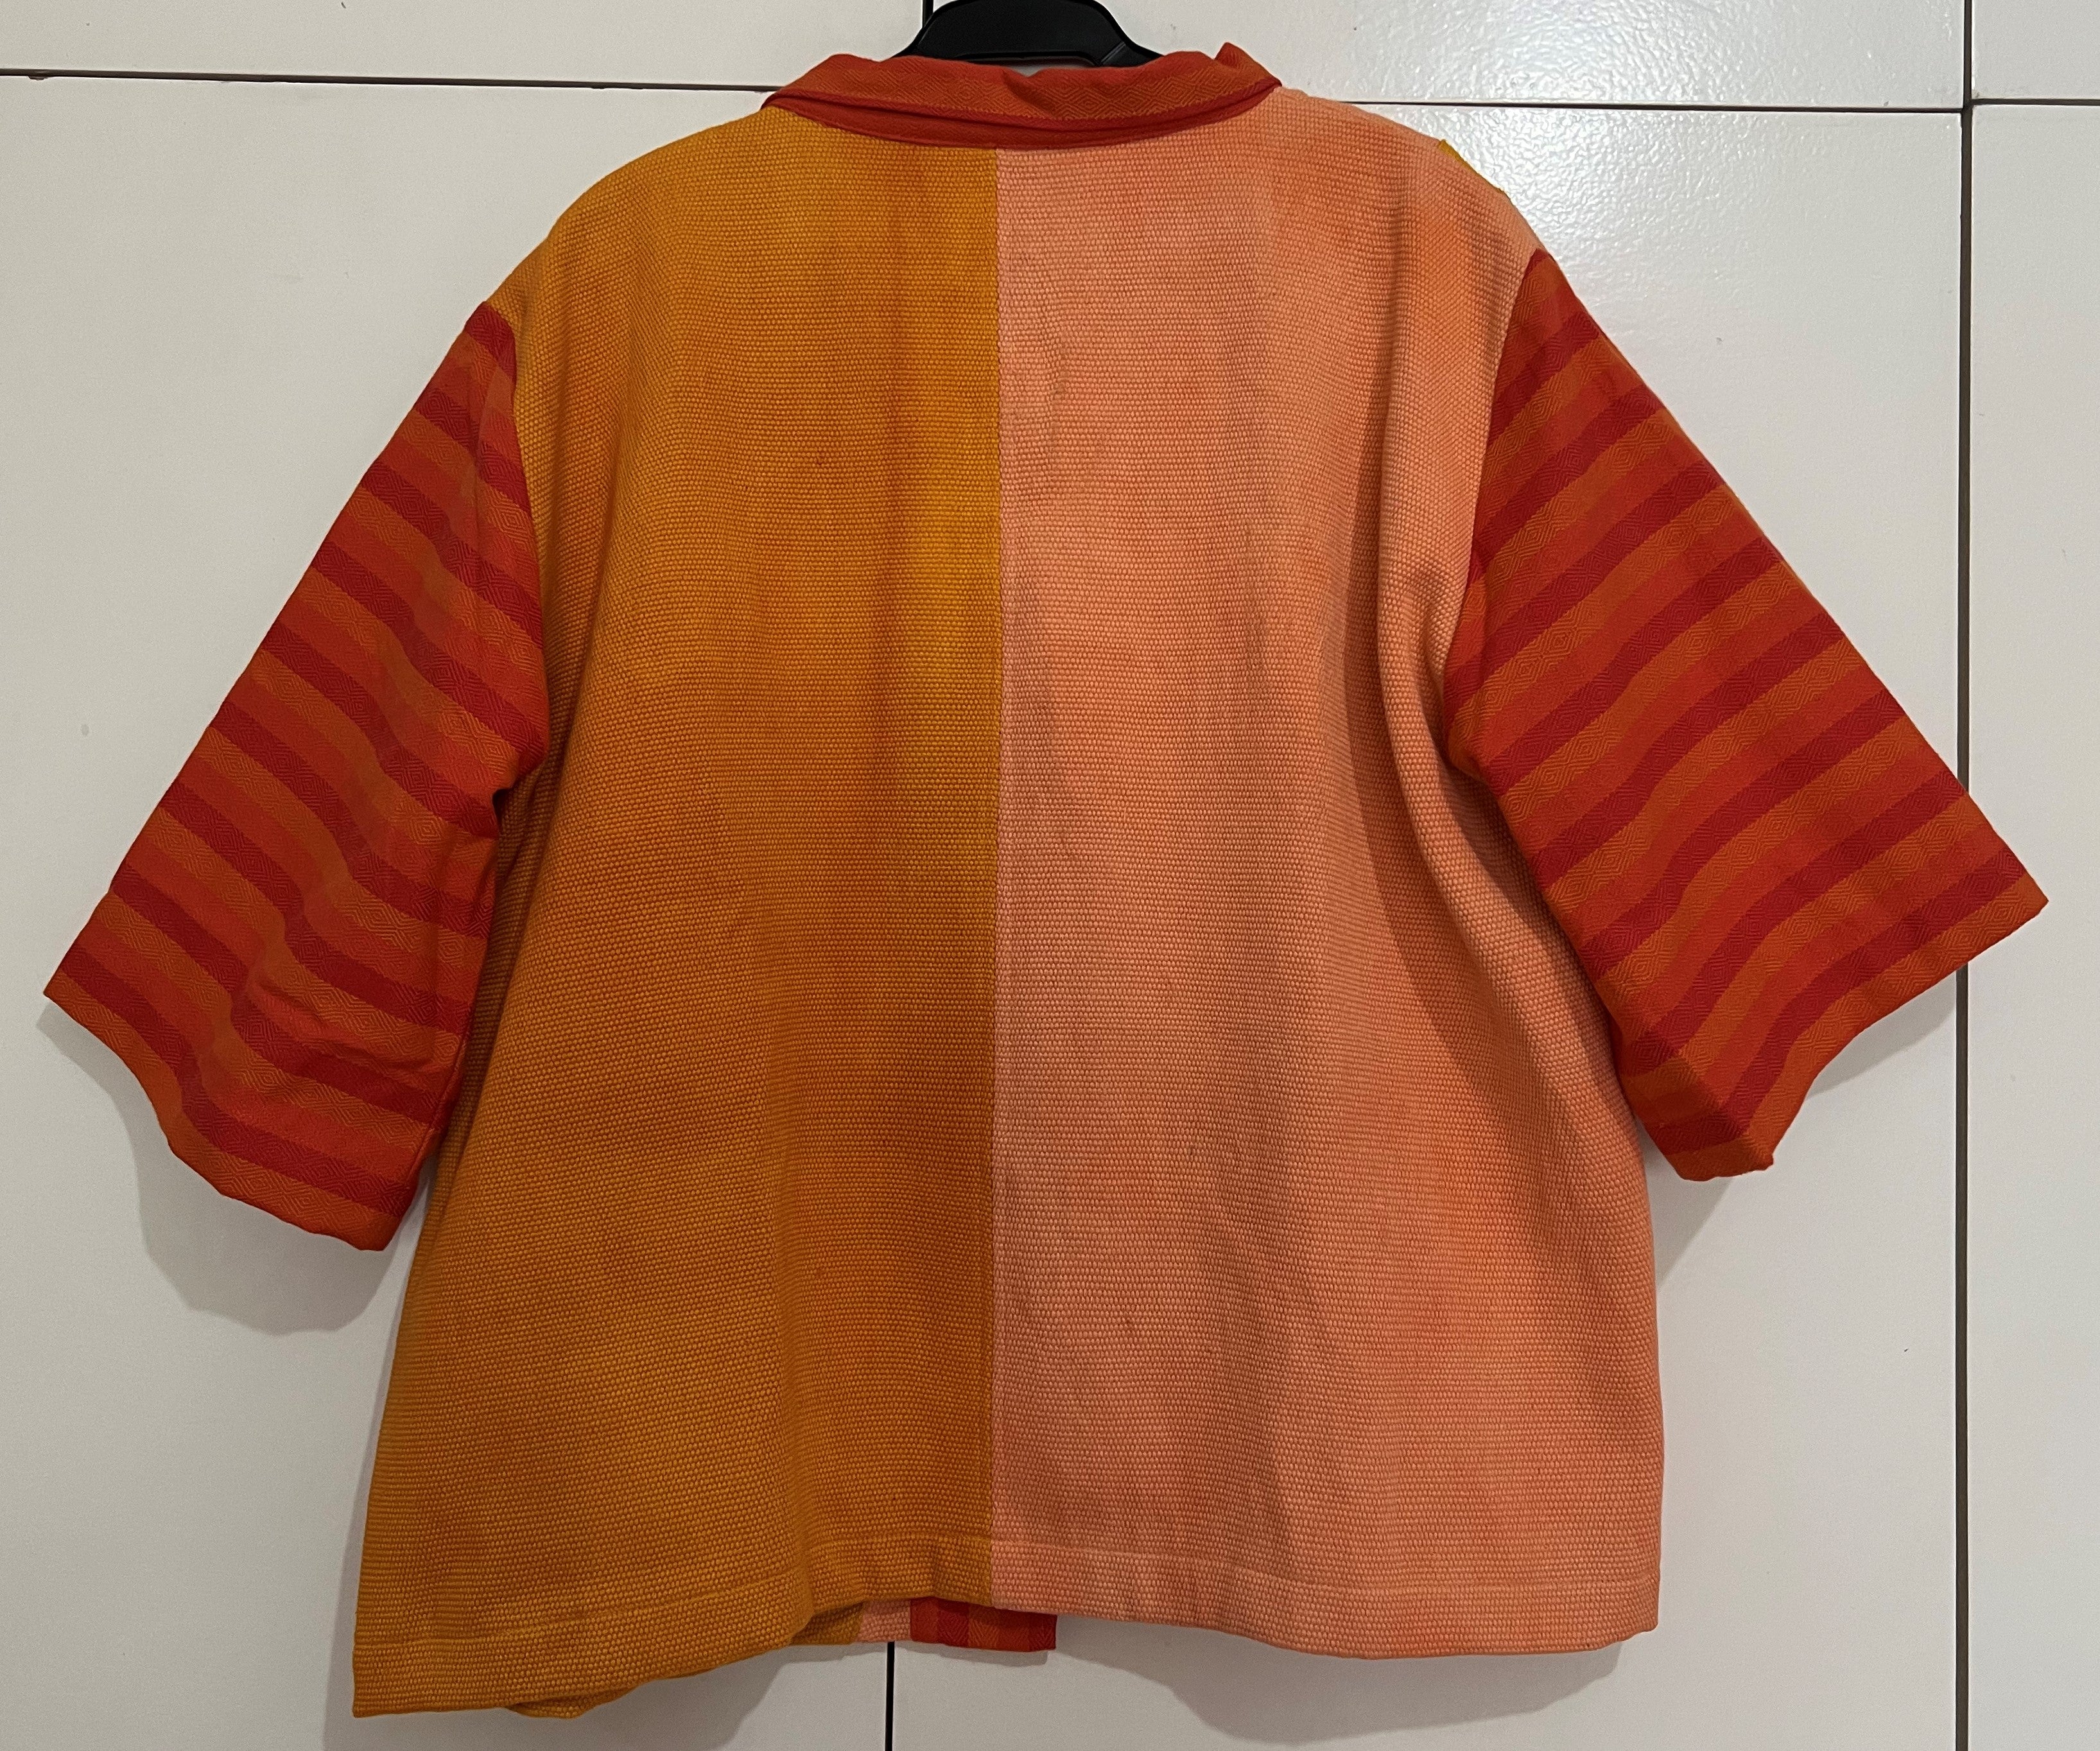 Coat in Natural Dye Shades of Orange